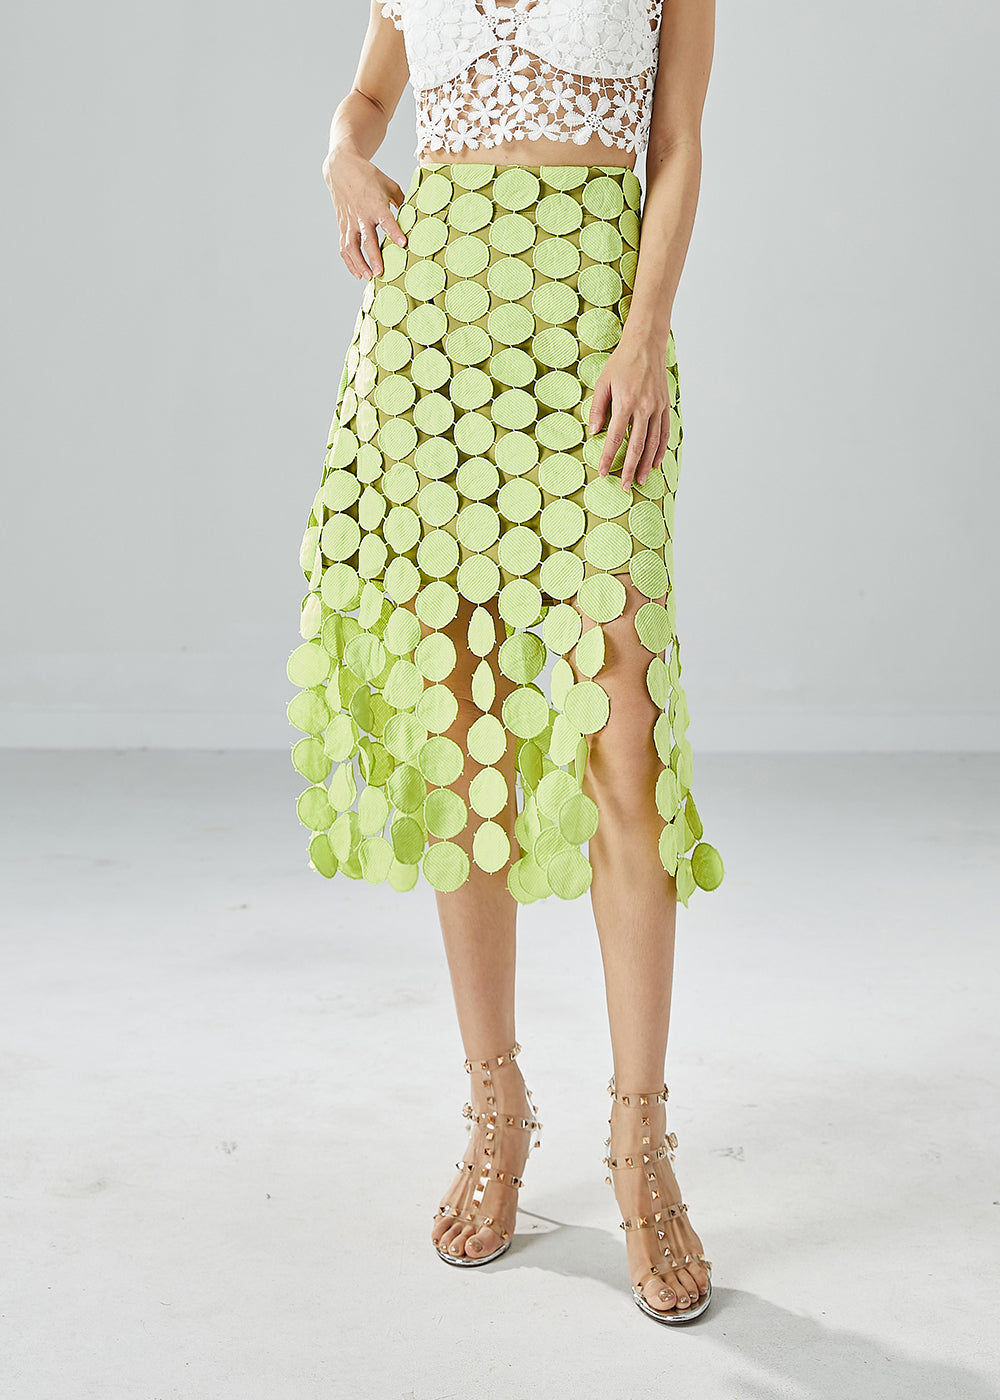 Original Design Grass Green Embroideried Circle Slim Fit Skirts Summer